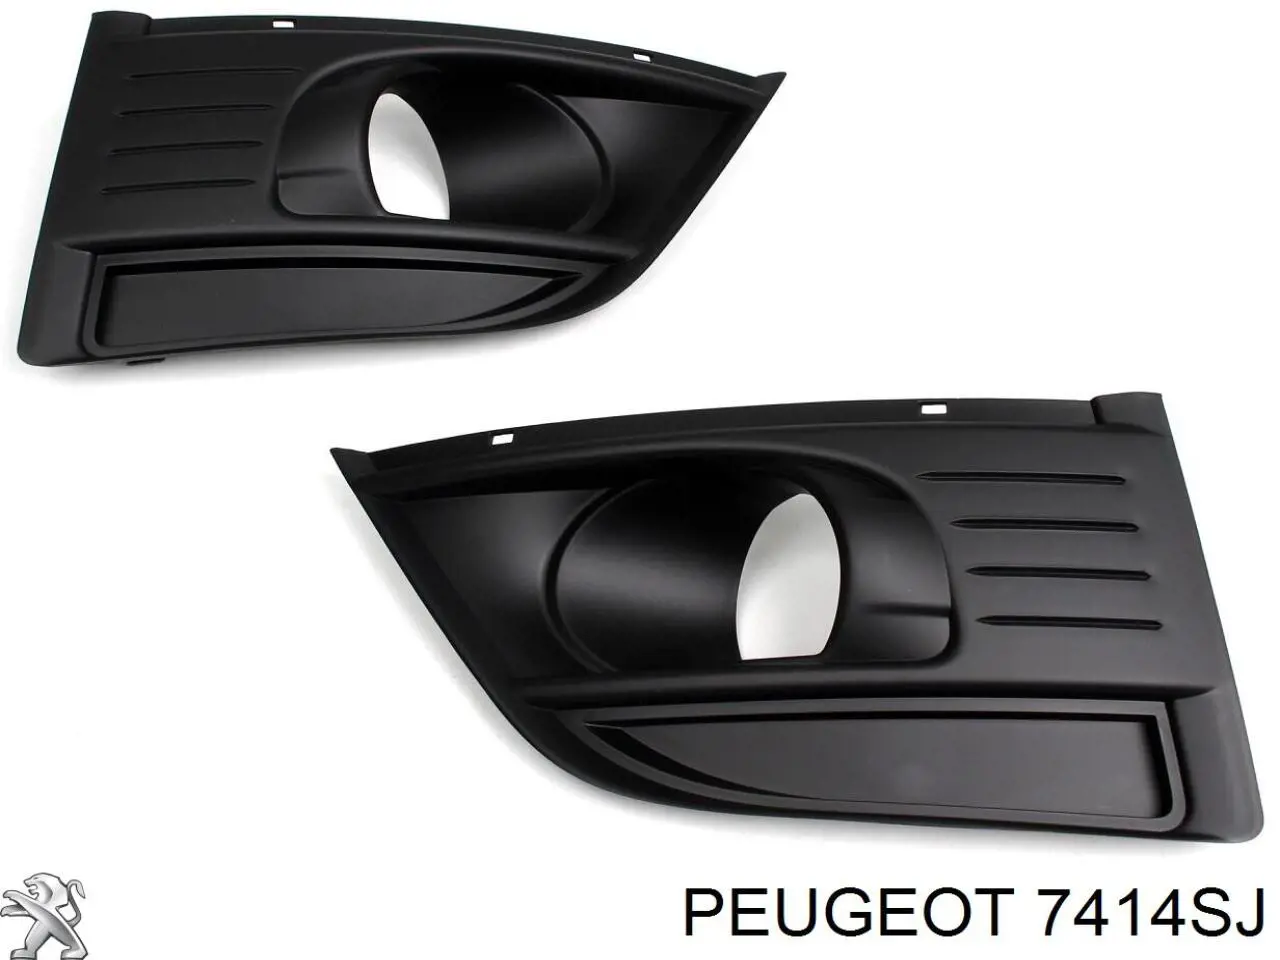 7414SJ Peugeot/Citroen rejilla de ventilación, parachoques delantero